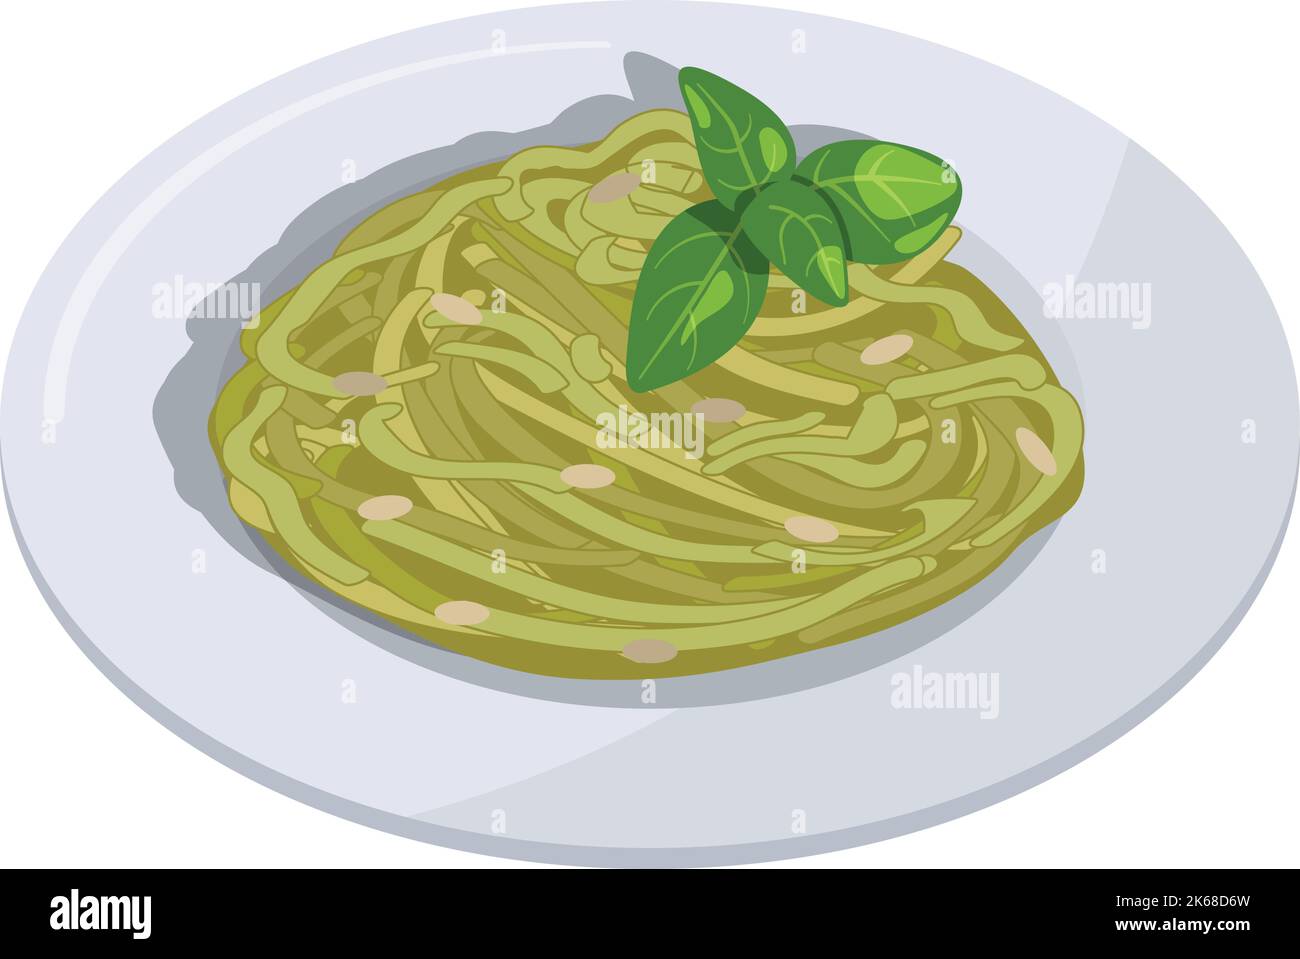 Pesto pasta plate. Fresh tasty food icon Stock Vector